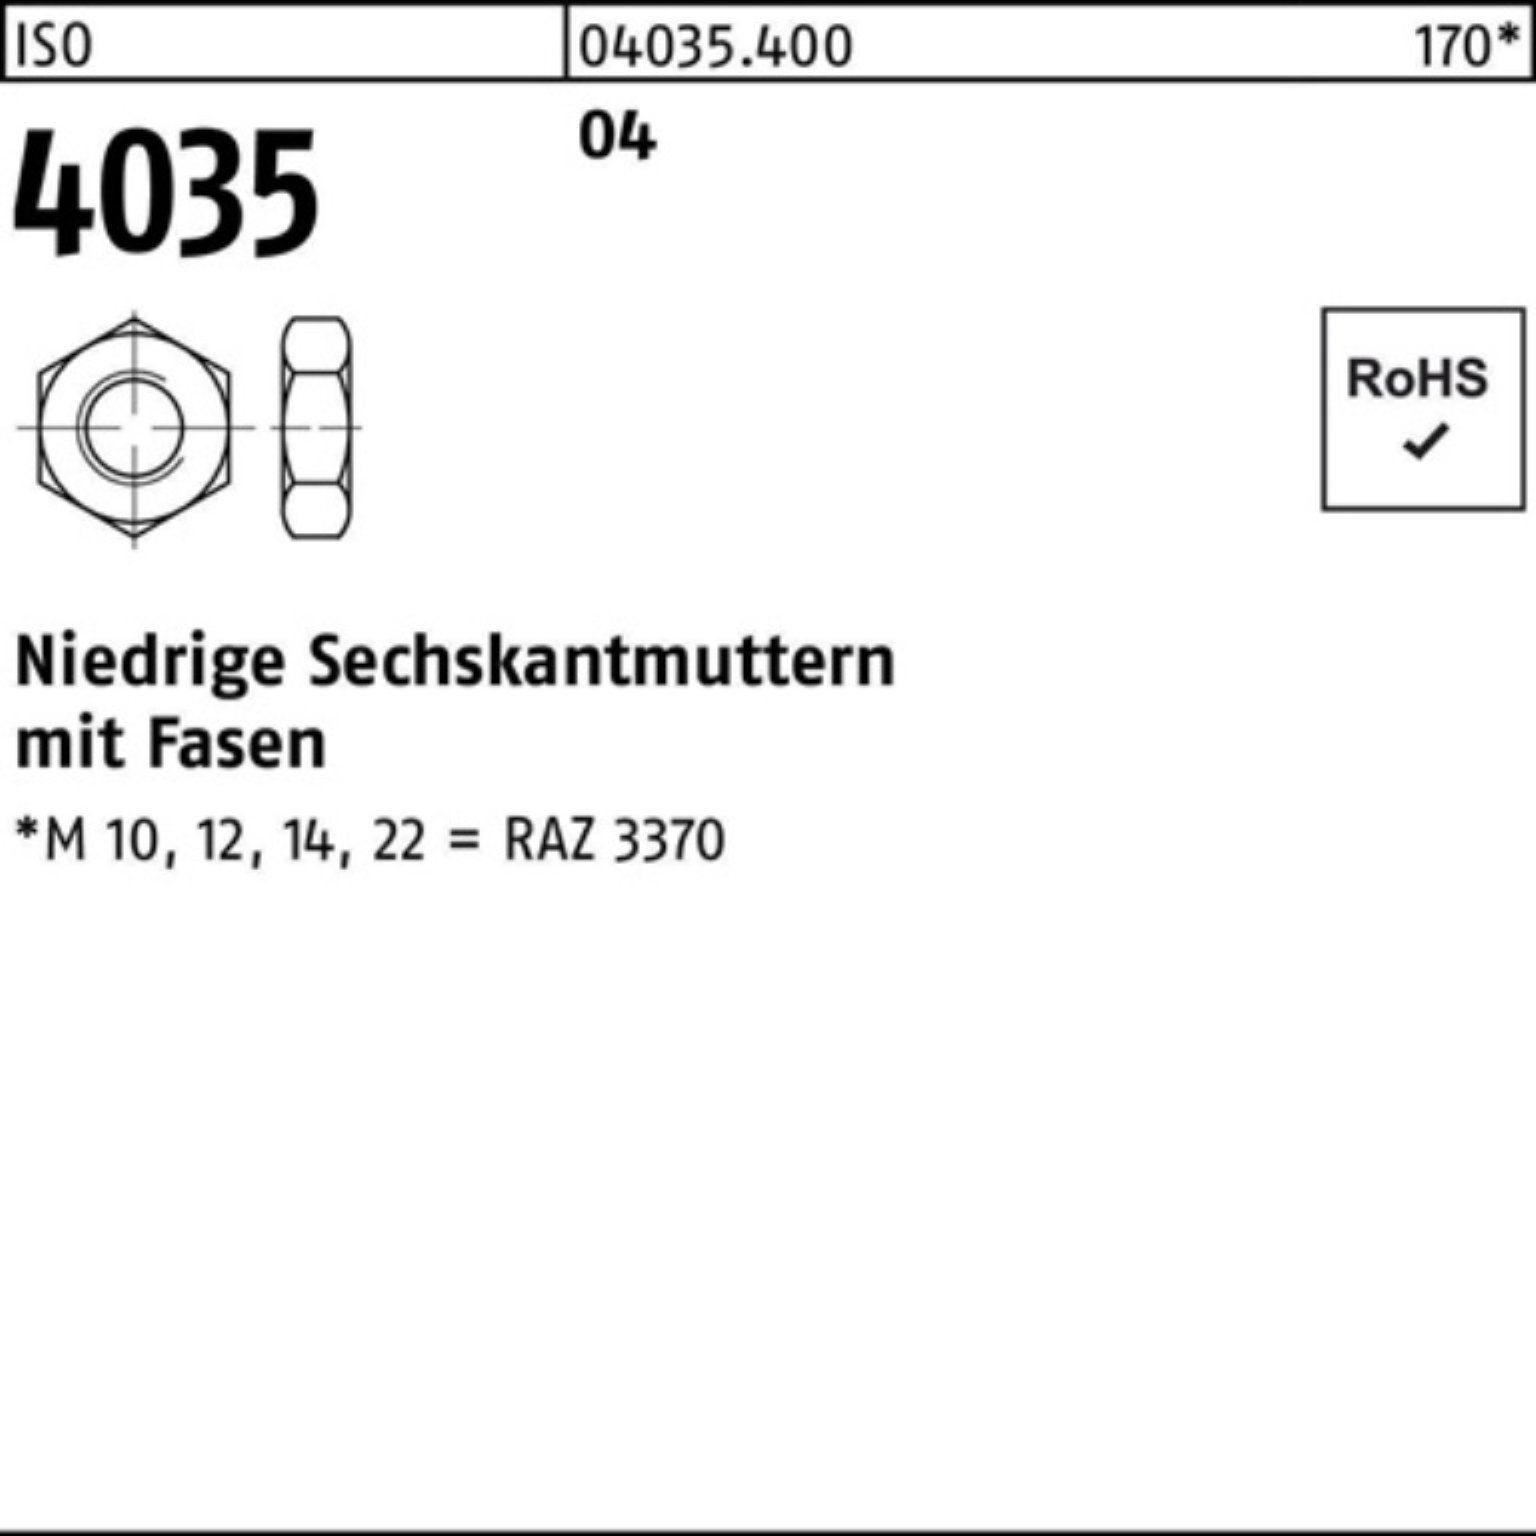 M14 niedrig Sechskantmutter Reyher 100er Automatenstahl Muttern 1 4035 ISO Pack Fasen